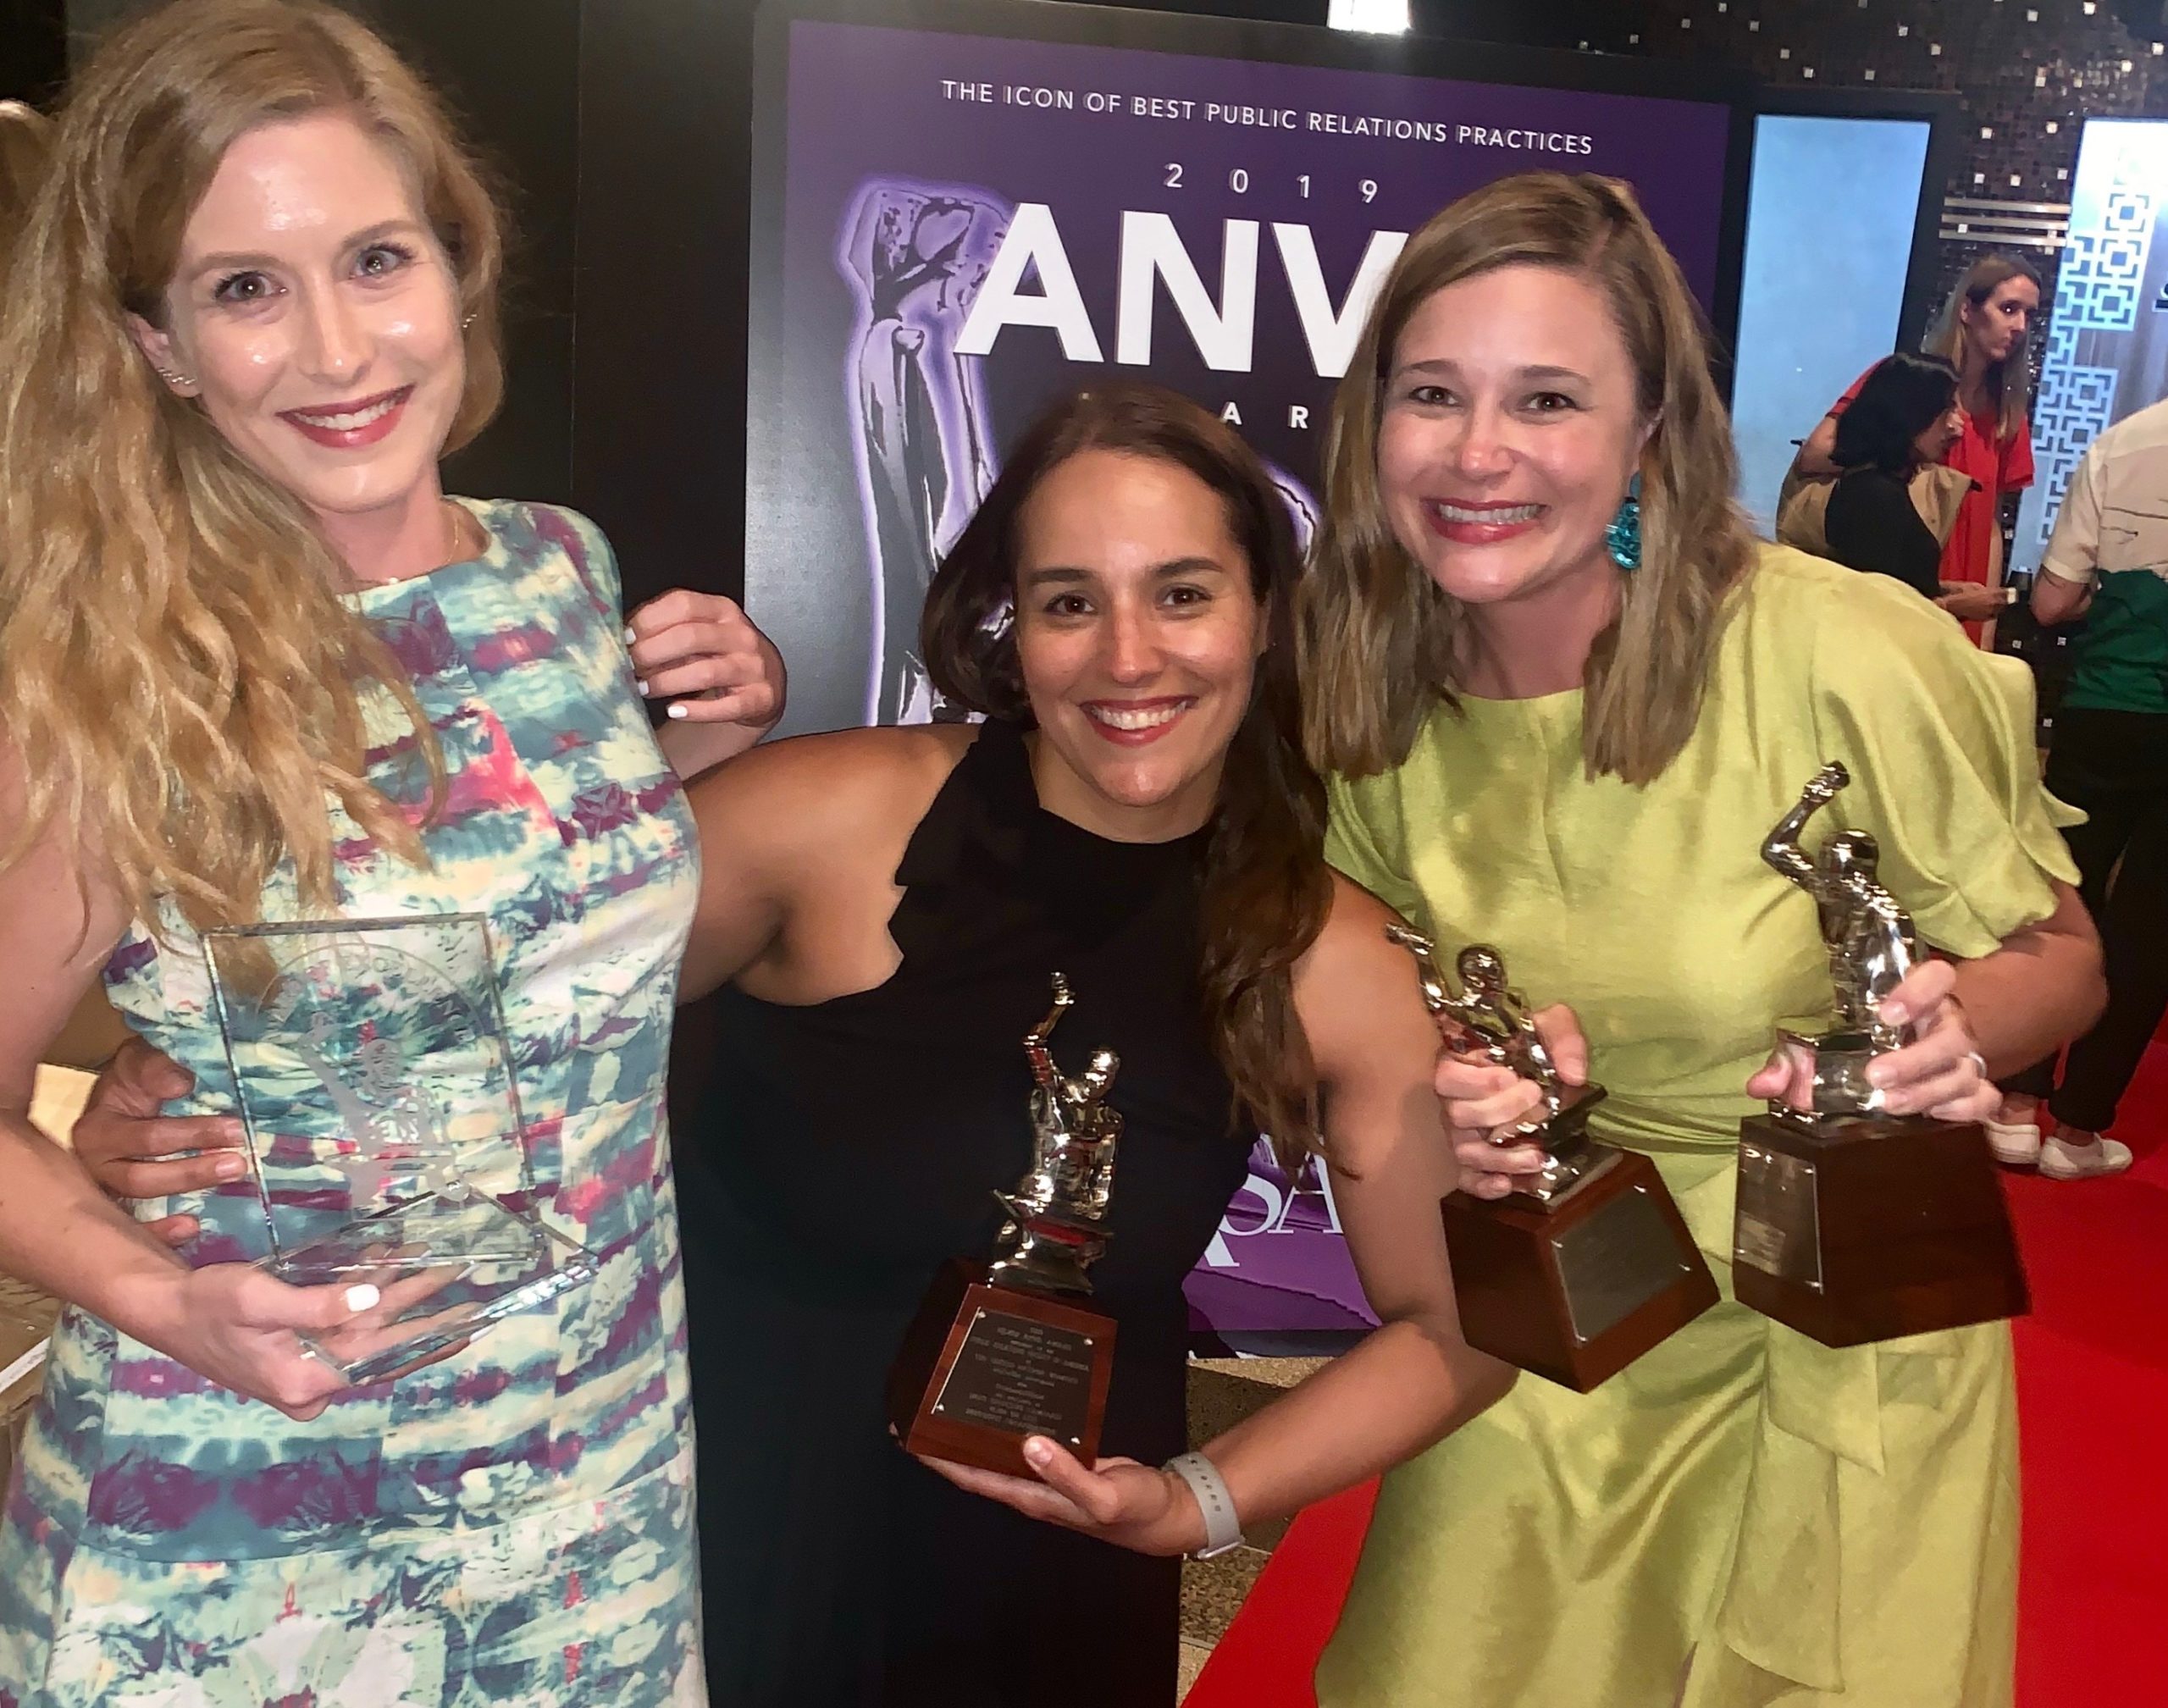 FleishmanHillard won on behalf of clients at the 2019 Silver Anvils awards, presented by PRSA.